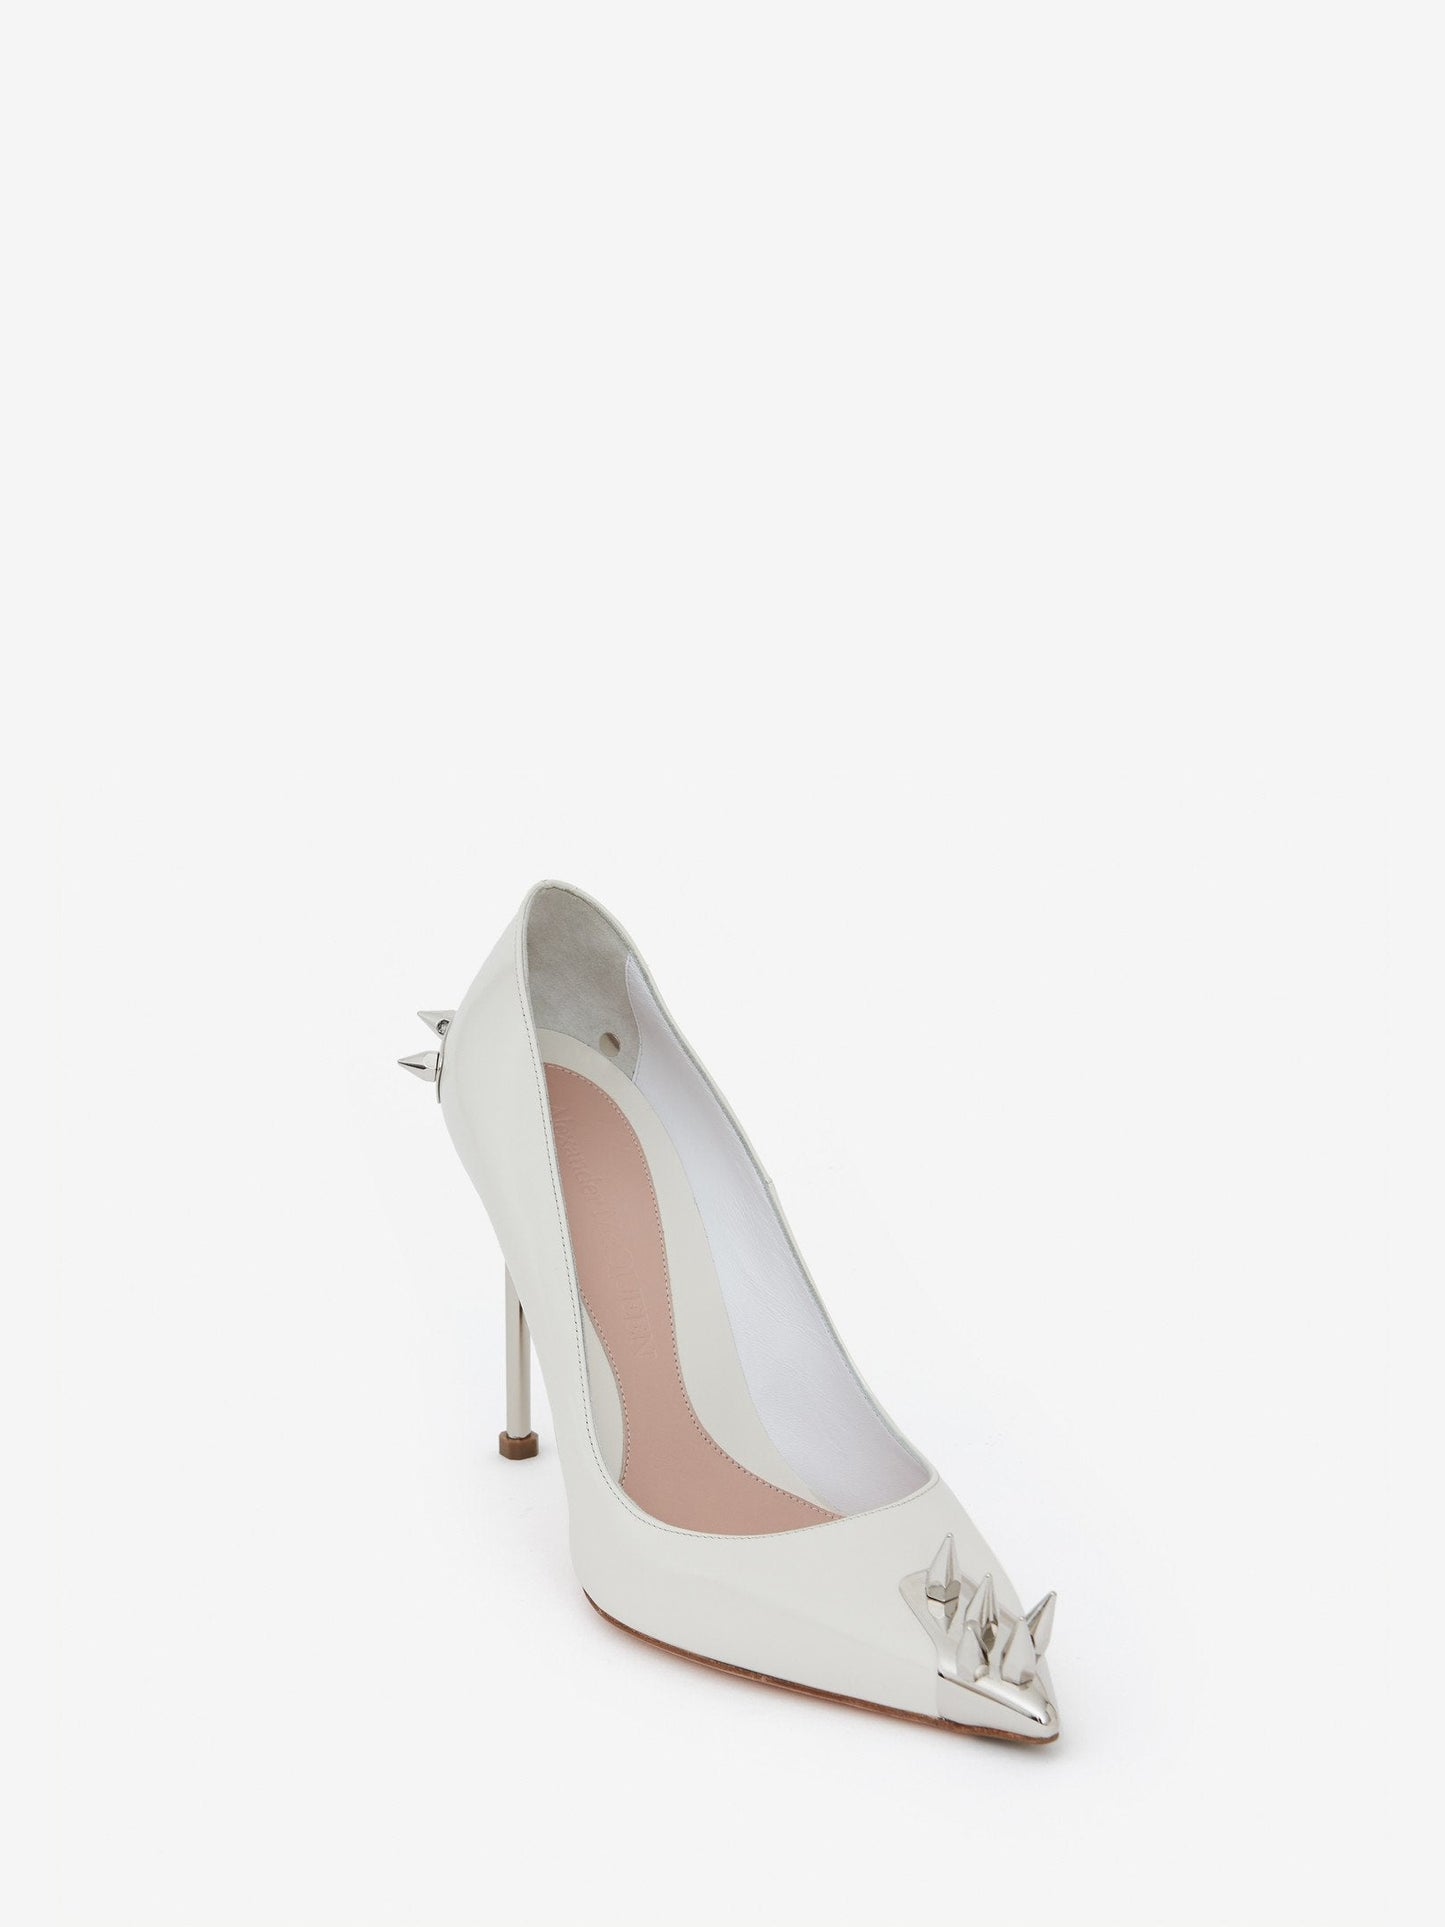 M*queen  Shoes Stud White Heels